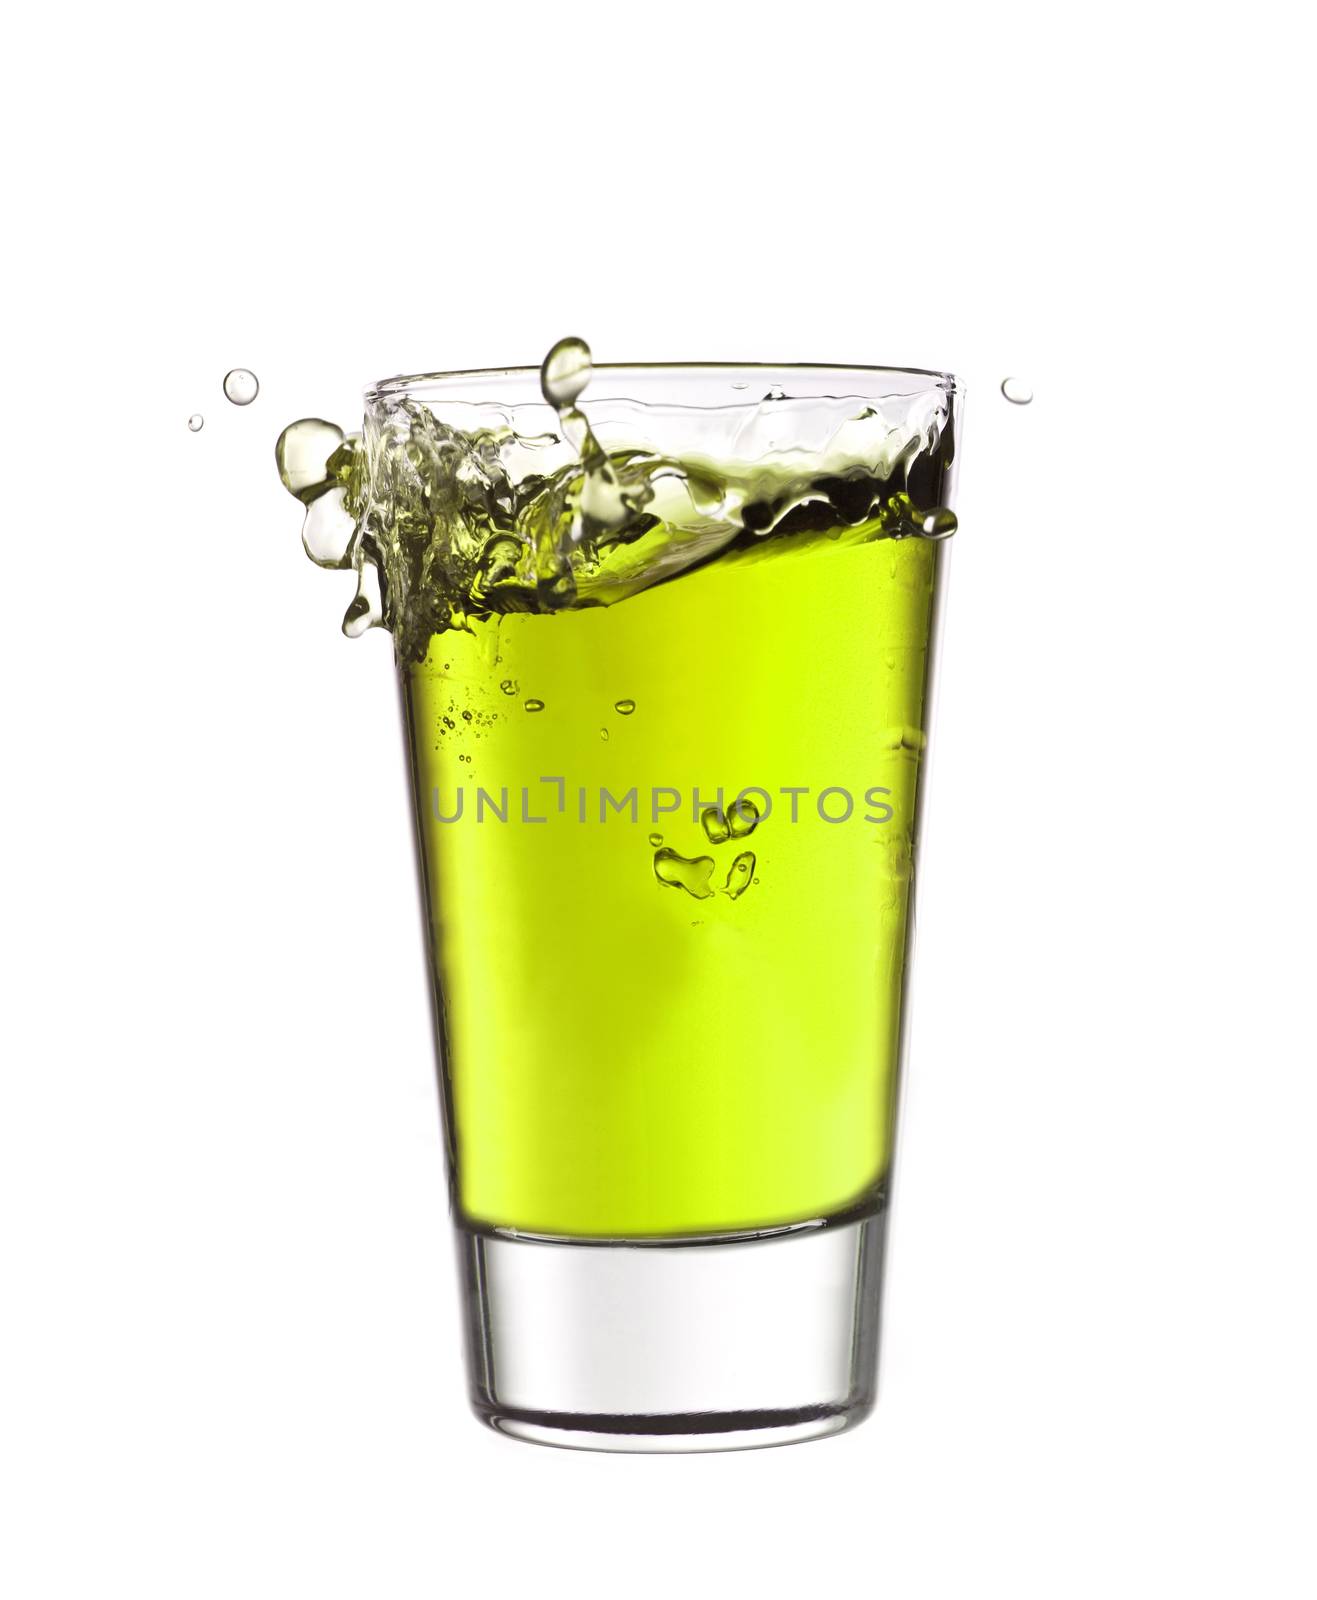 Splash in a glass of green lemonade by gemenacom